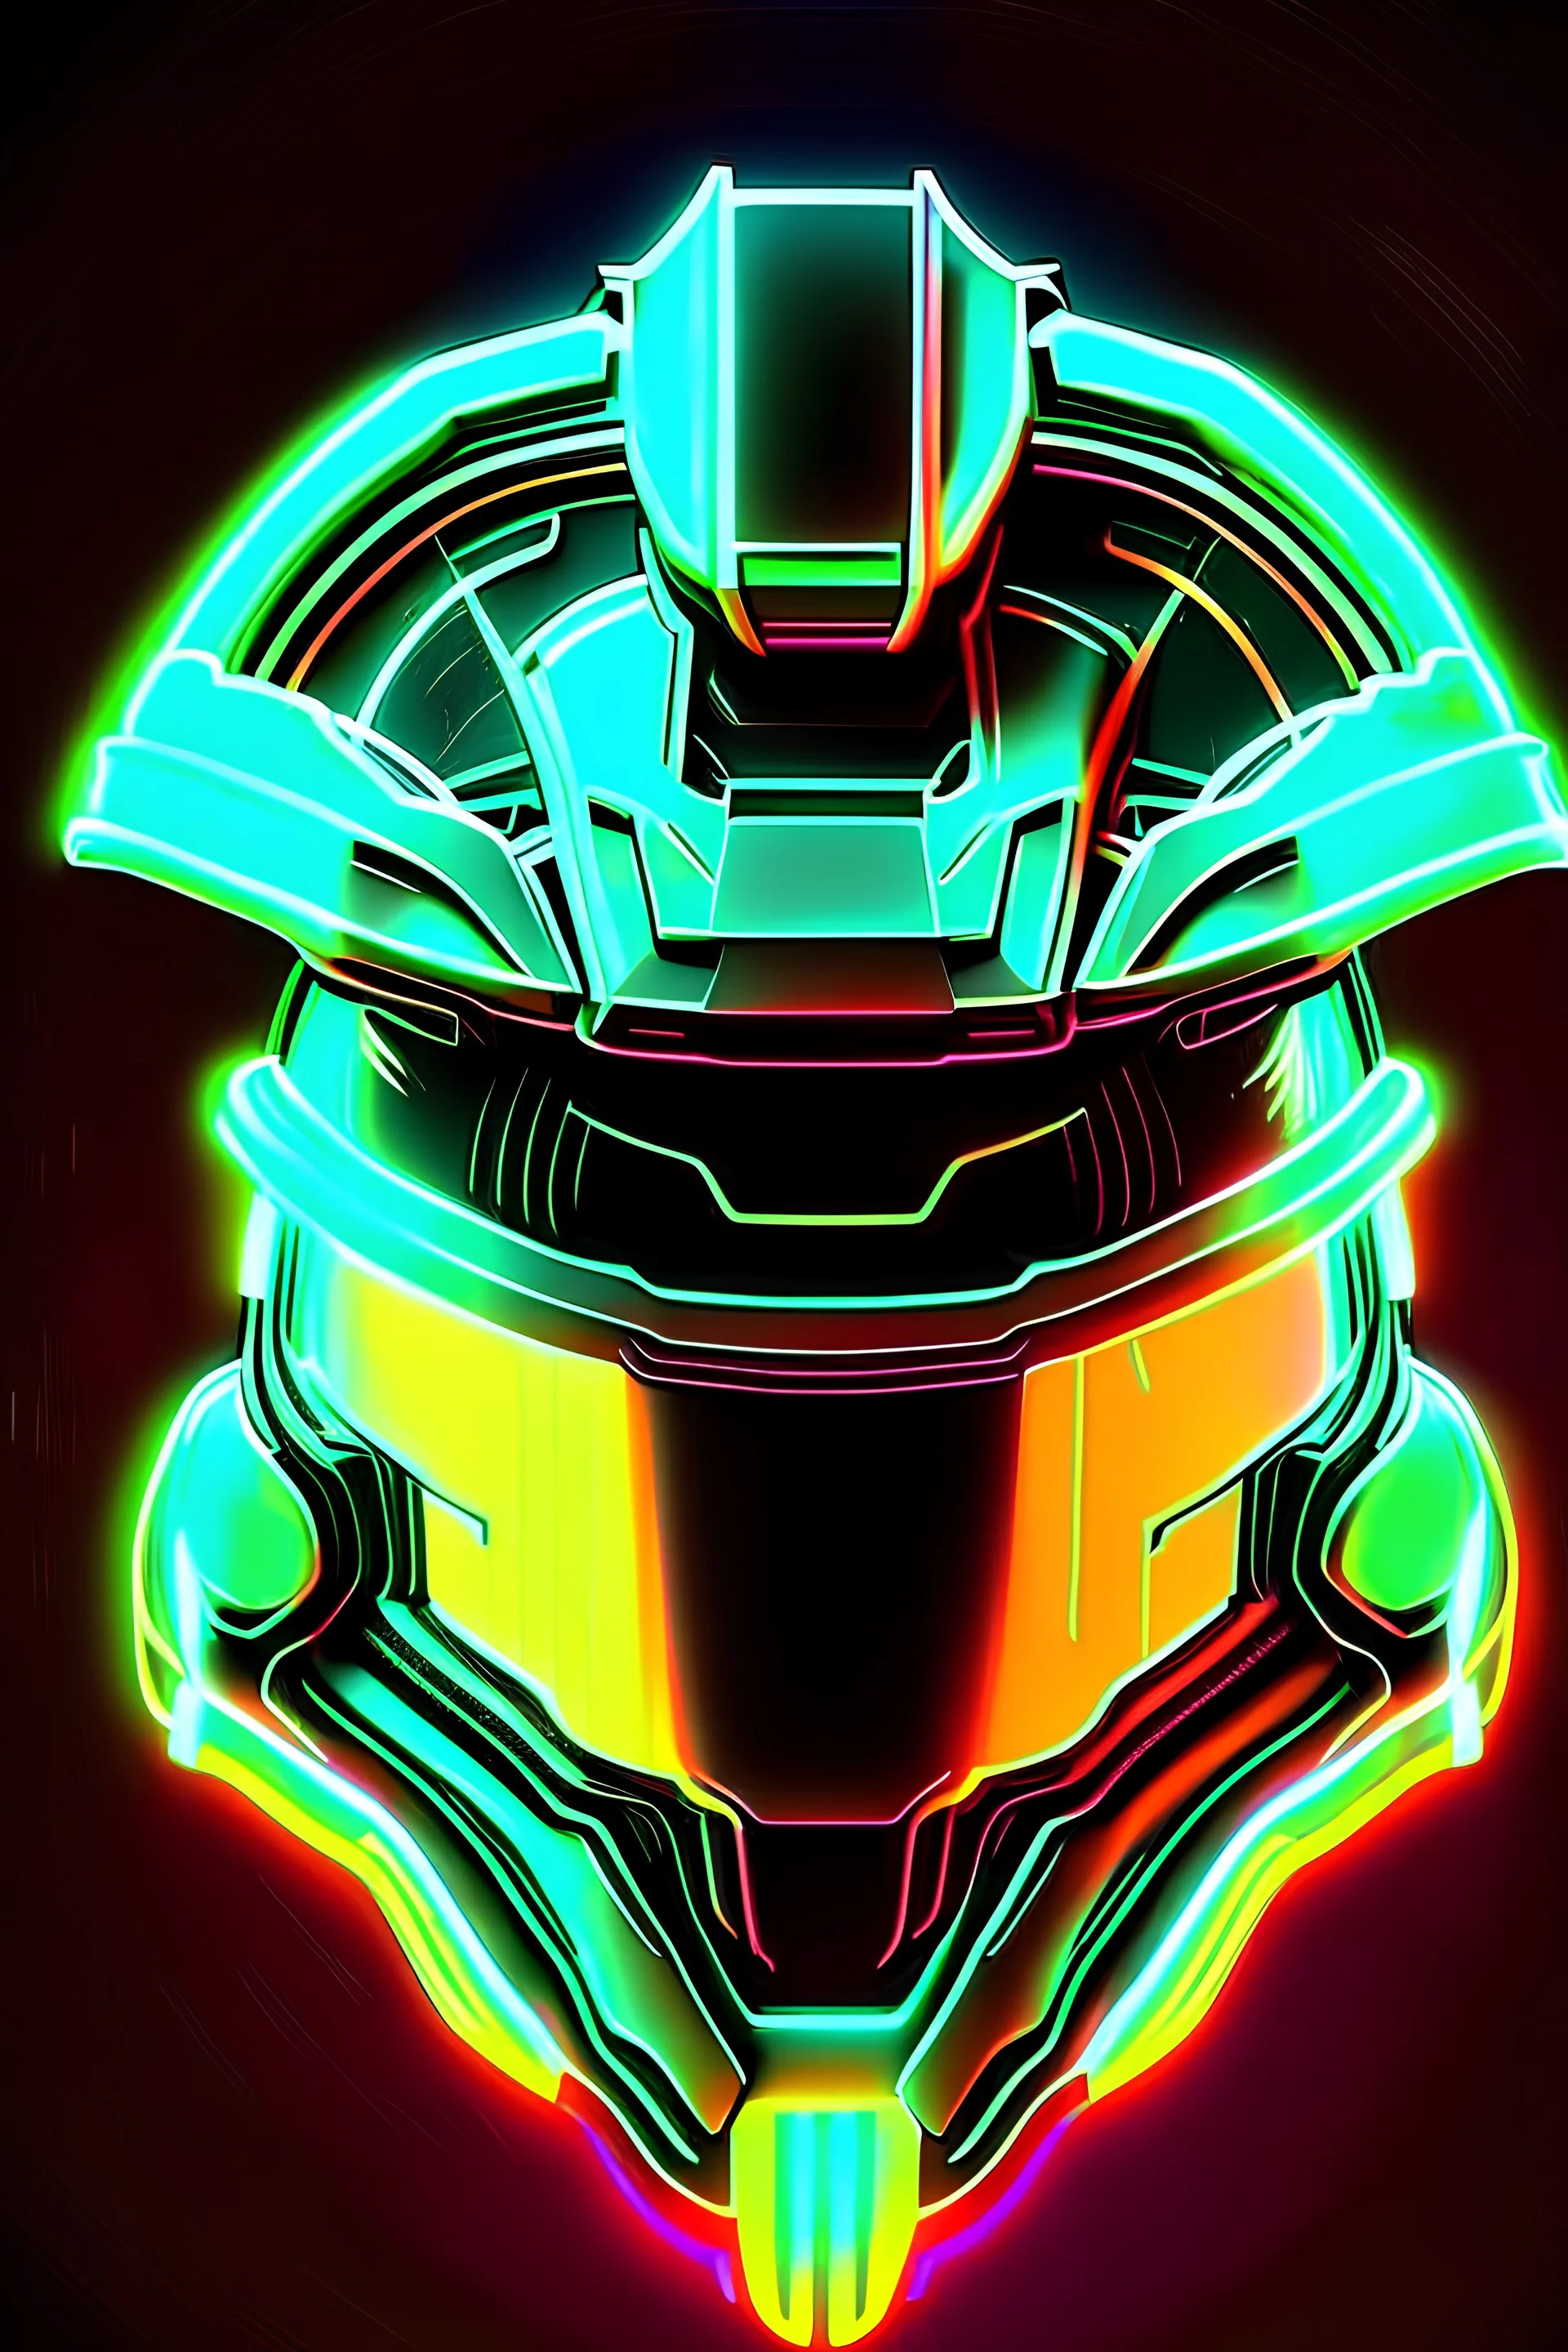 halo master chief helmet front 2d neon illustration